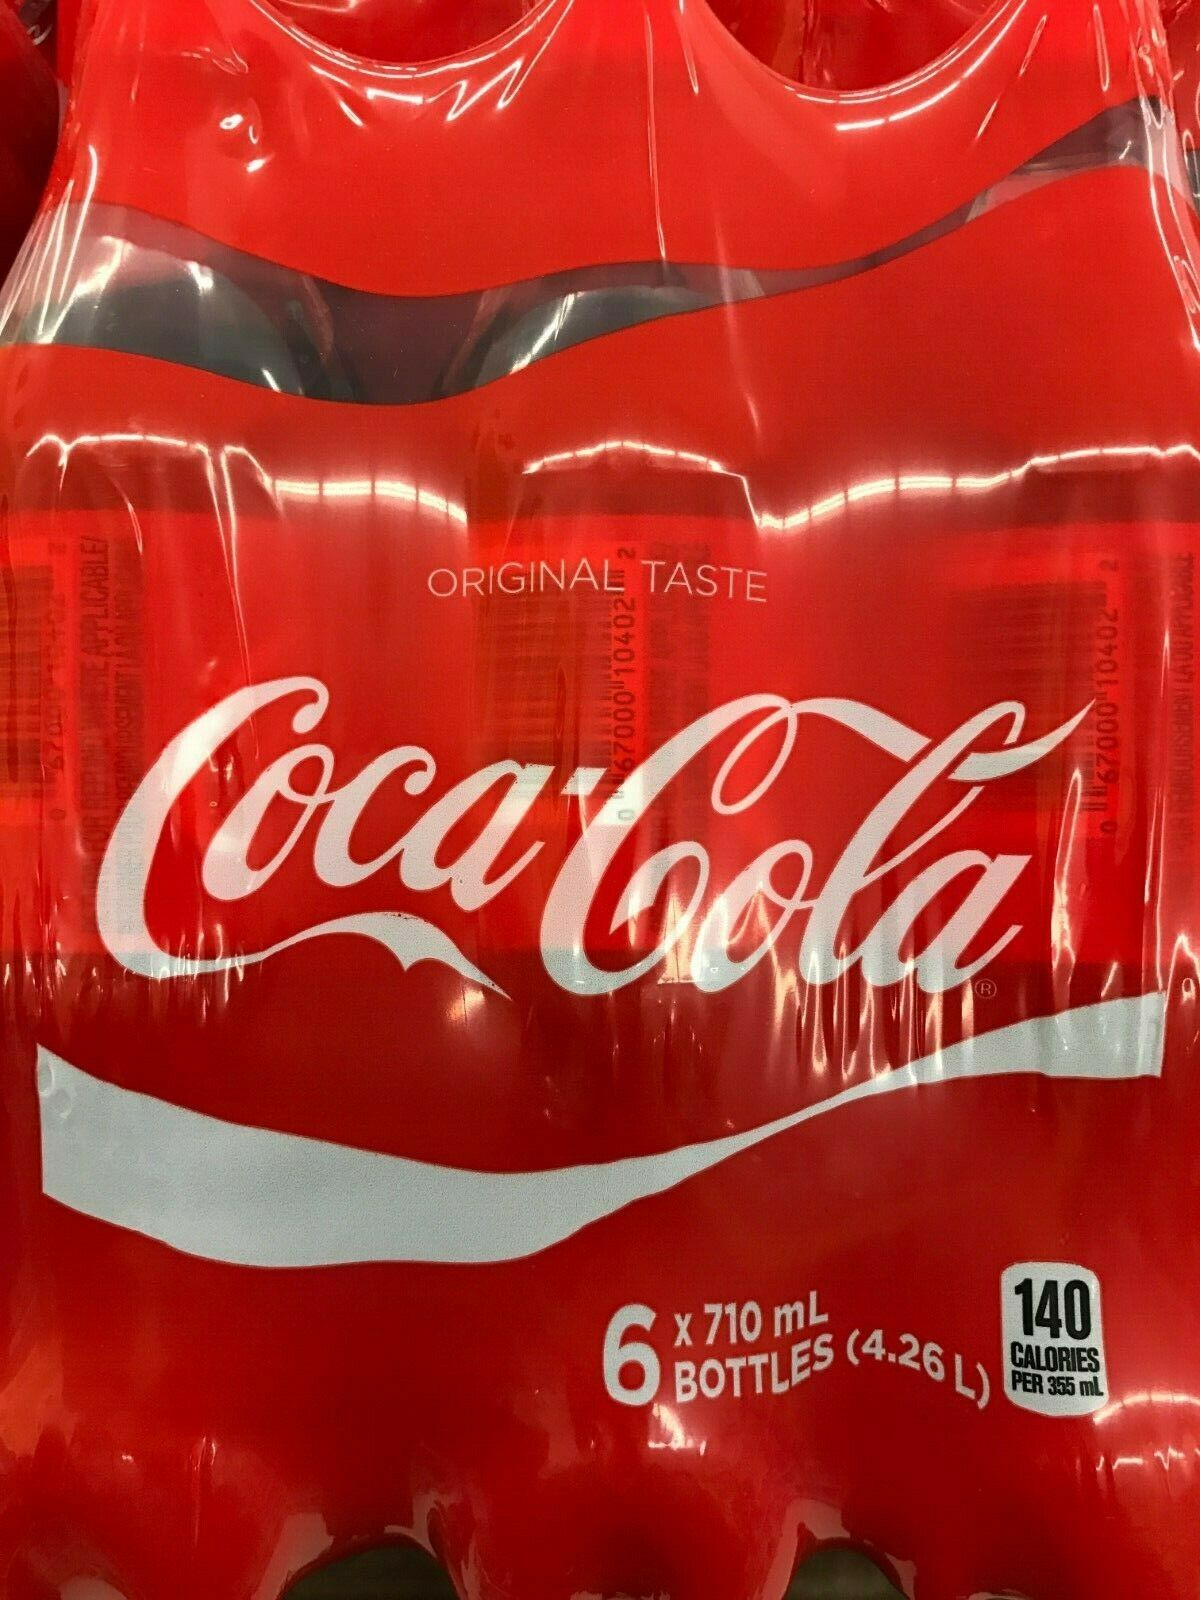 6 Bottles Of Coca Cola Canadian Soda Pop 6x710ml